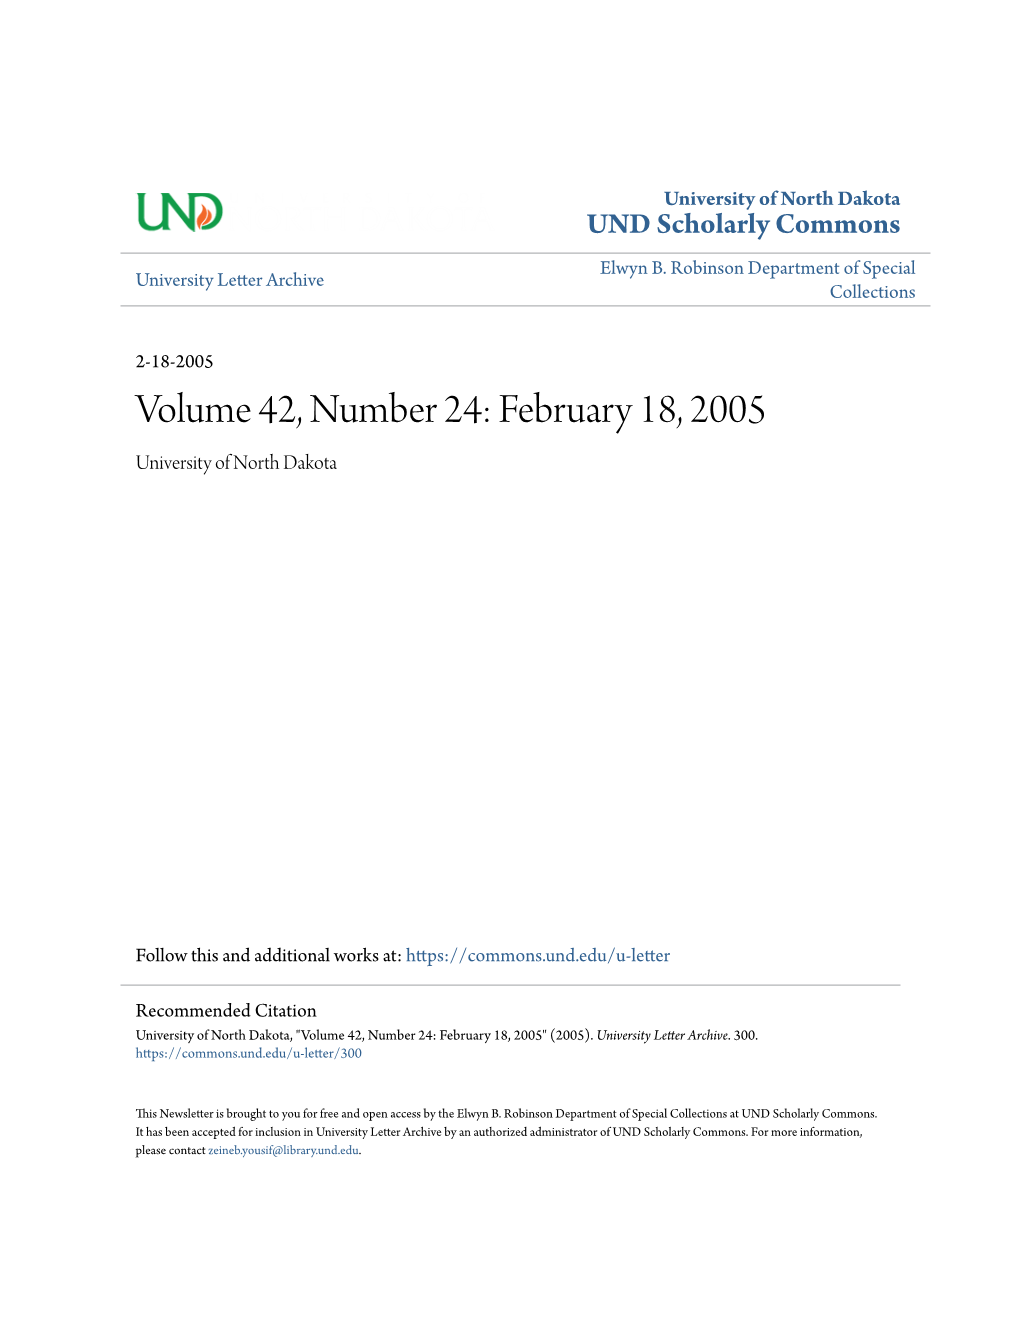 Volume 42, Number 24: February 18, 2005 University of North Dakota